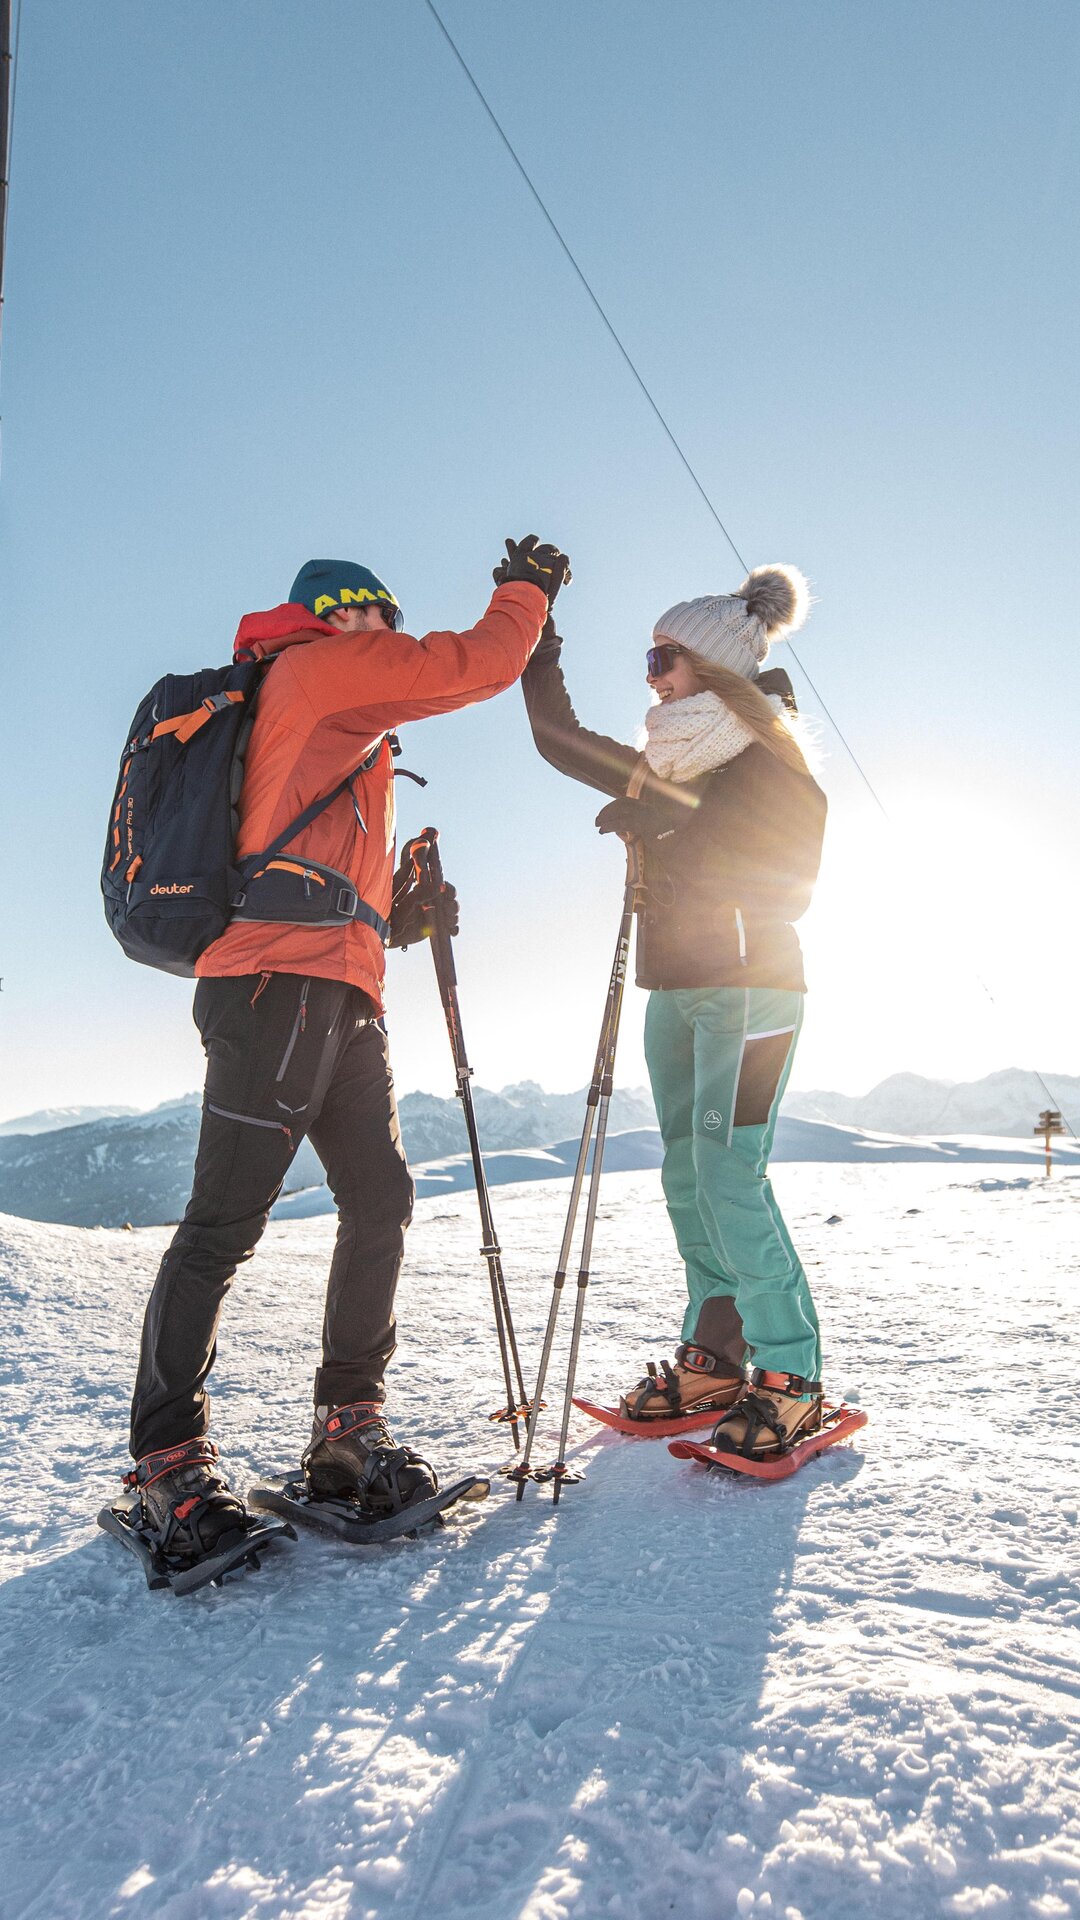 Schneeschuhwanderer geben sich High-Five am verschneiten Gipfel